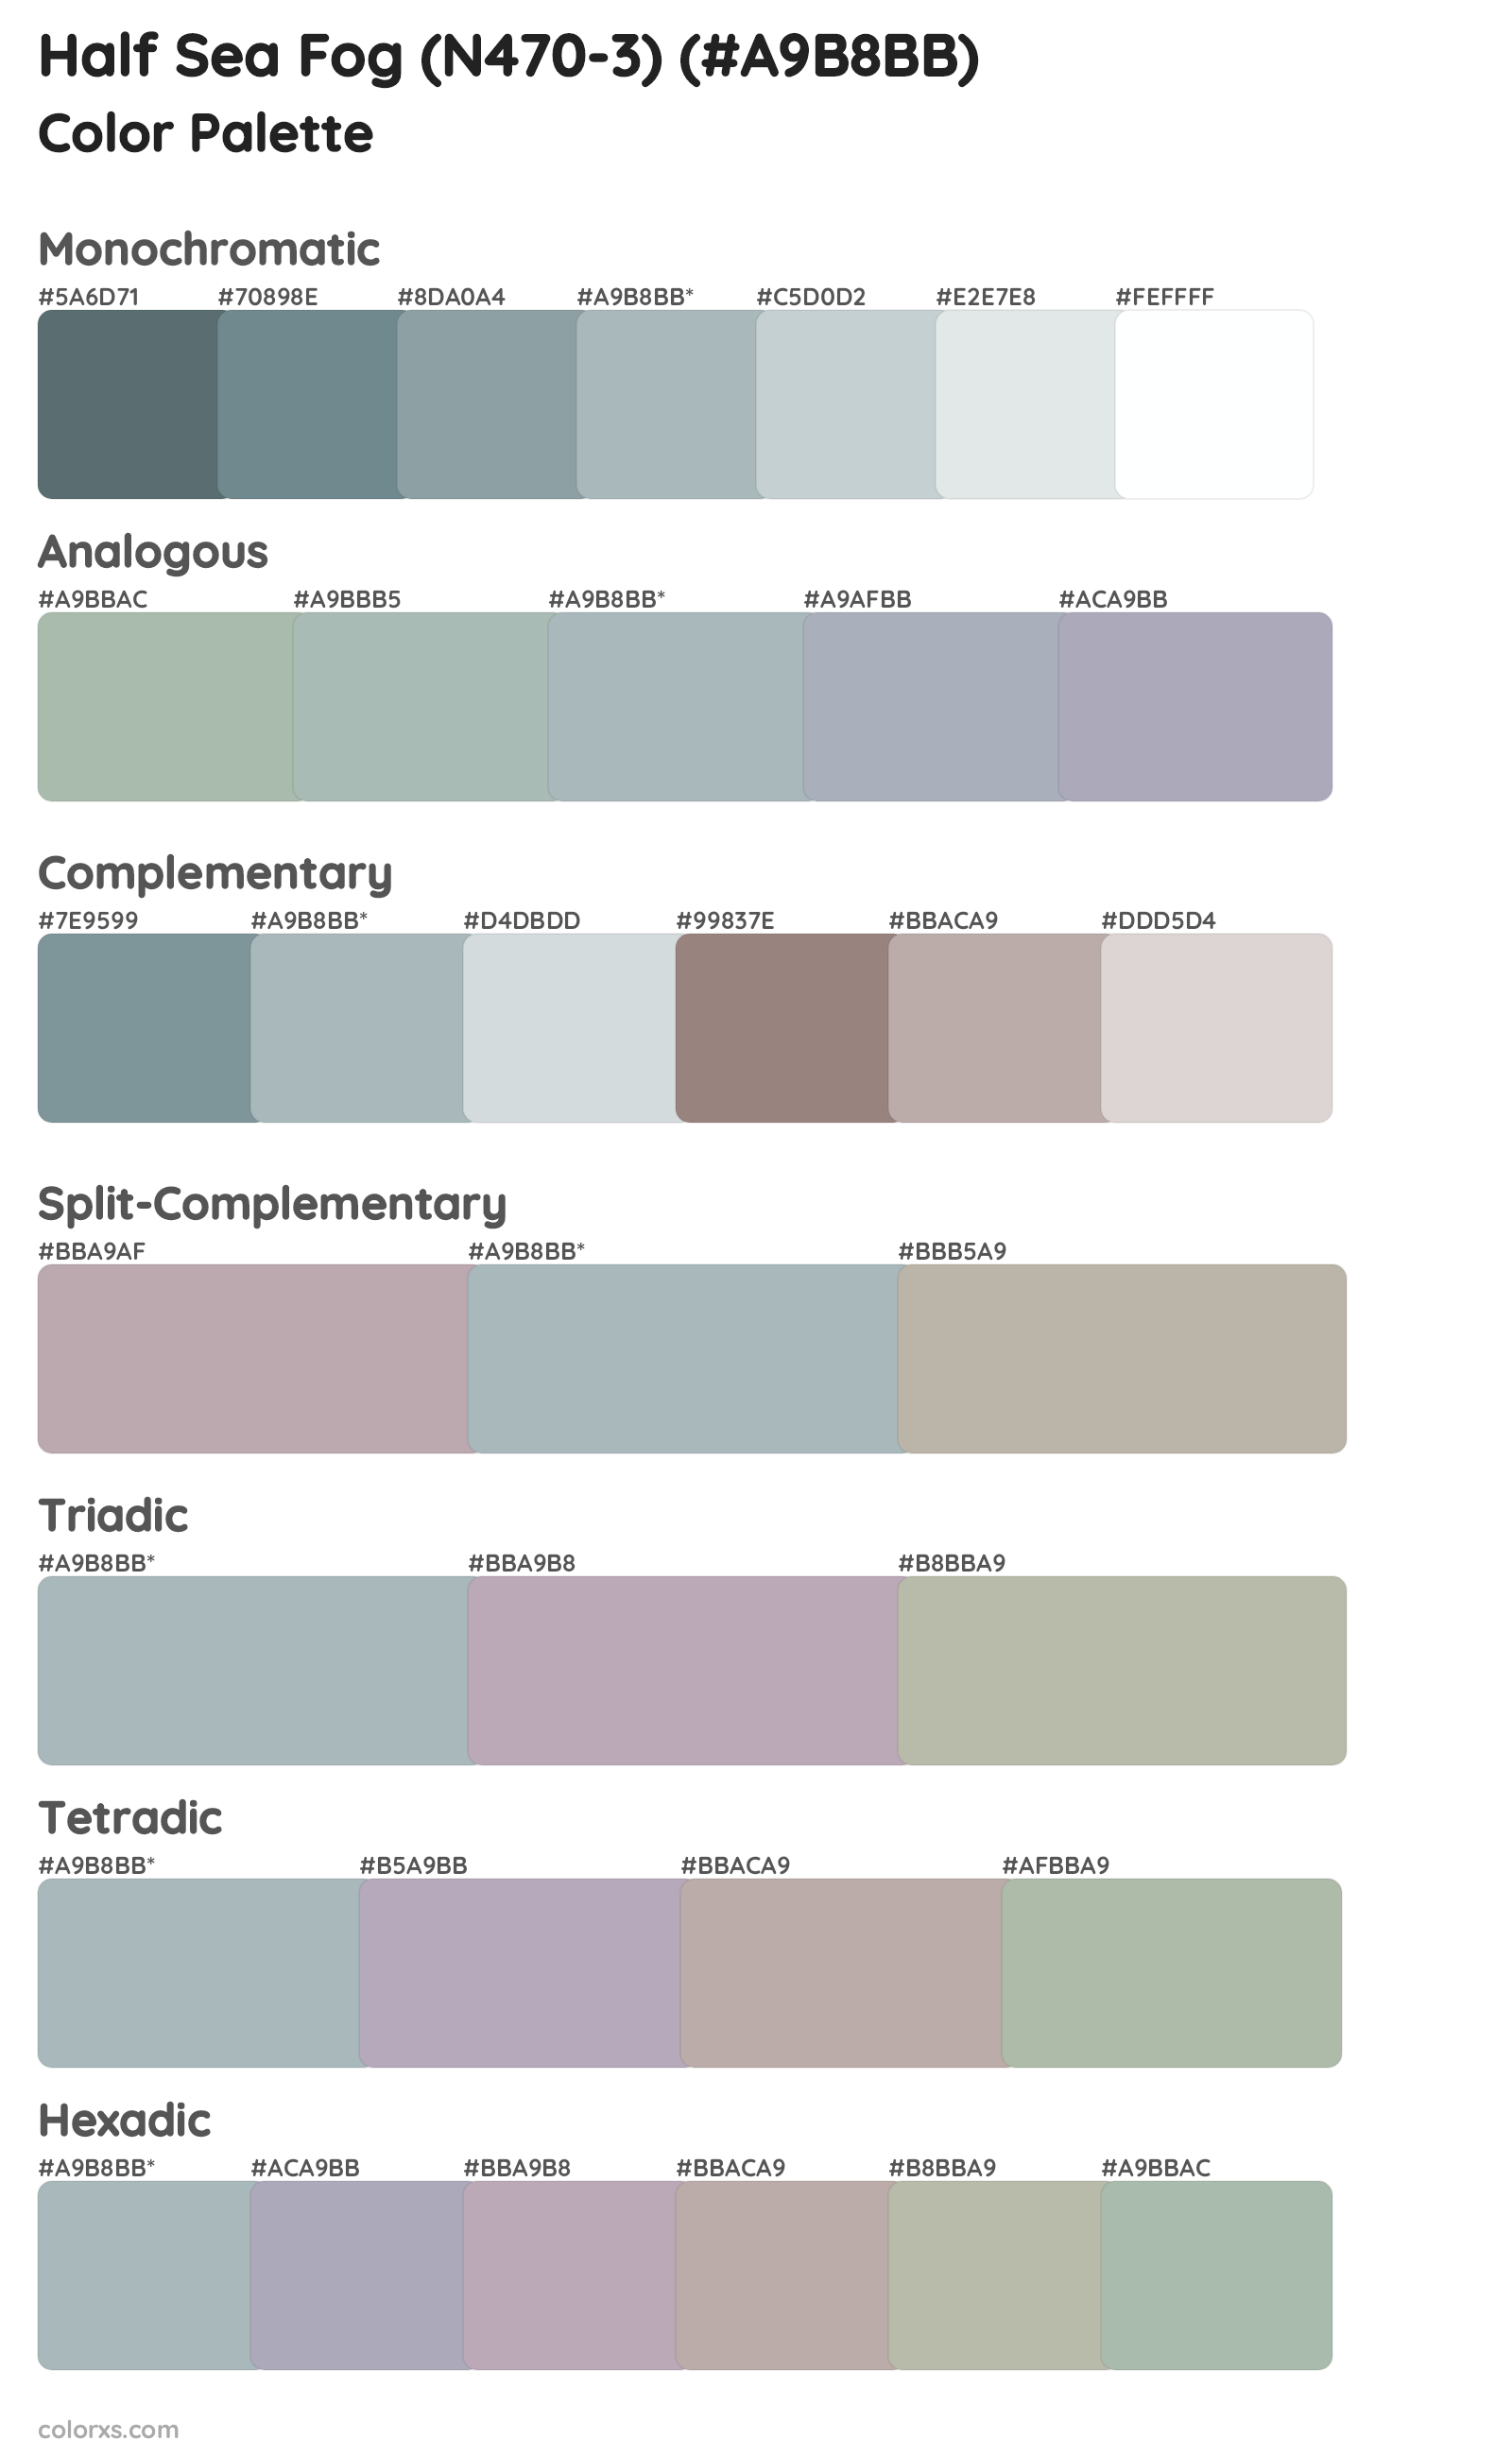 Half Sea Fog (N470-3) Color Scheme Palettes